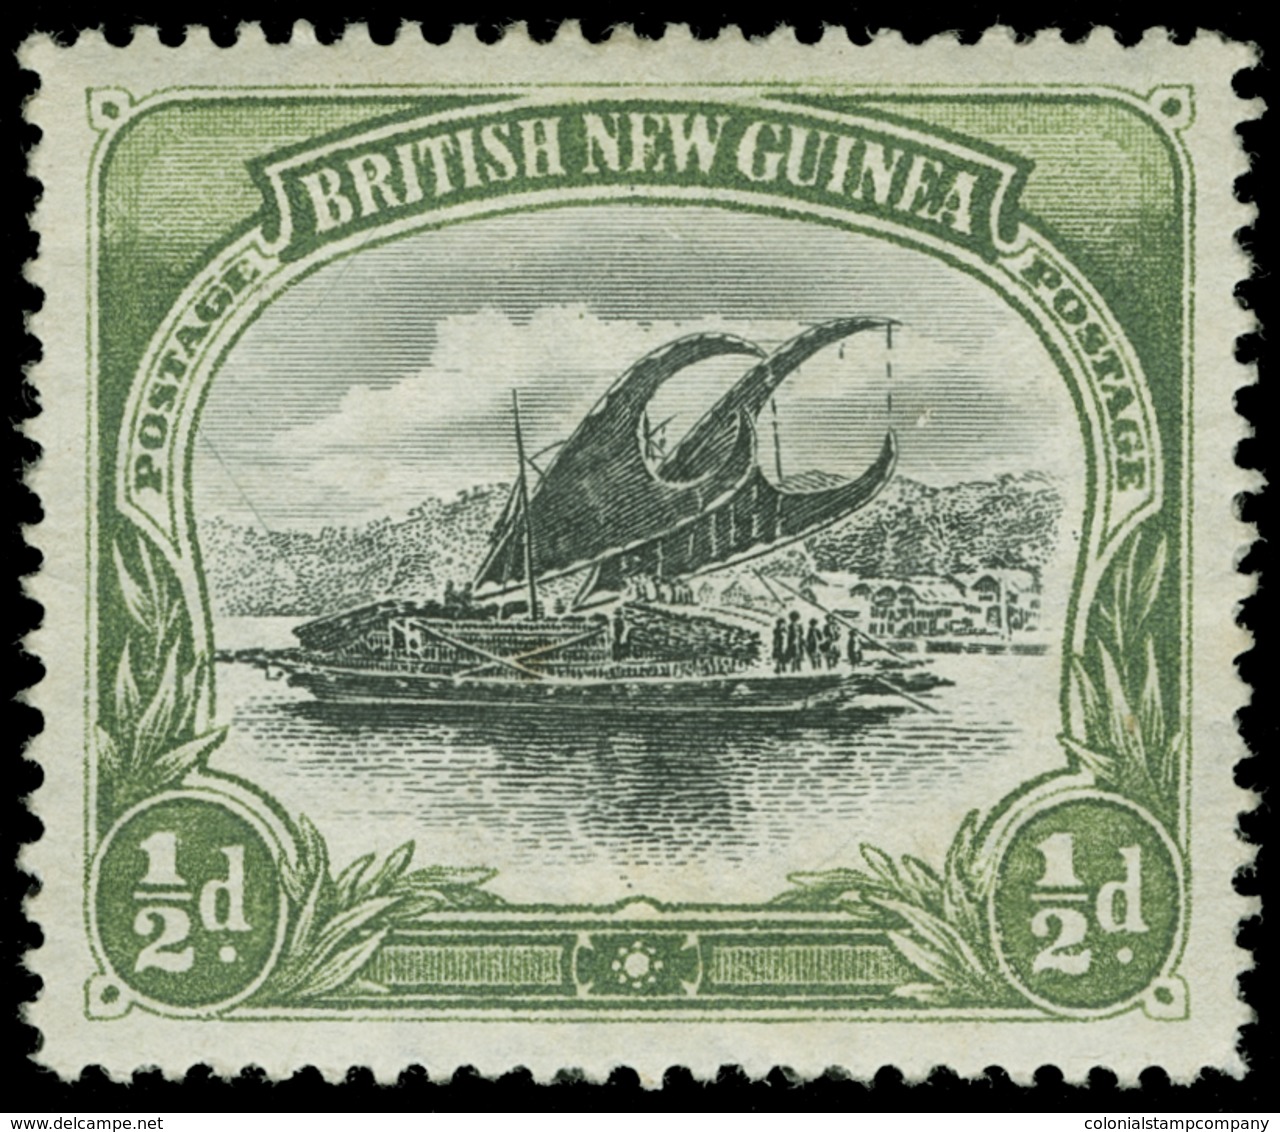 * Papua New Guinea - Lot No.867 - Papua New Guinea